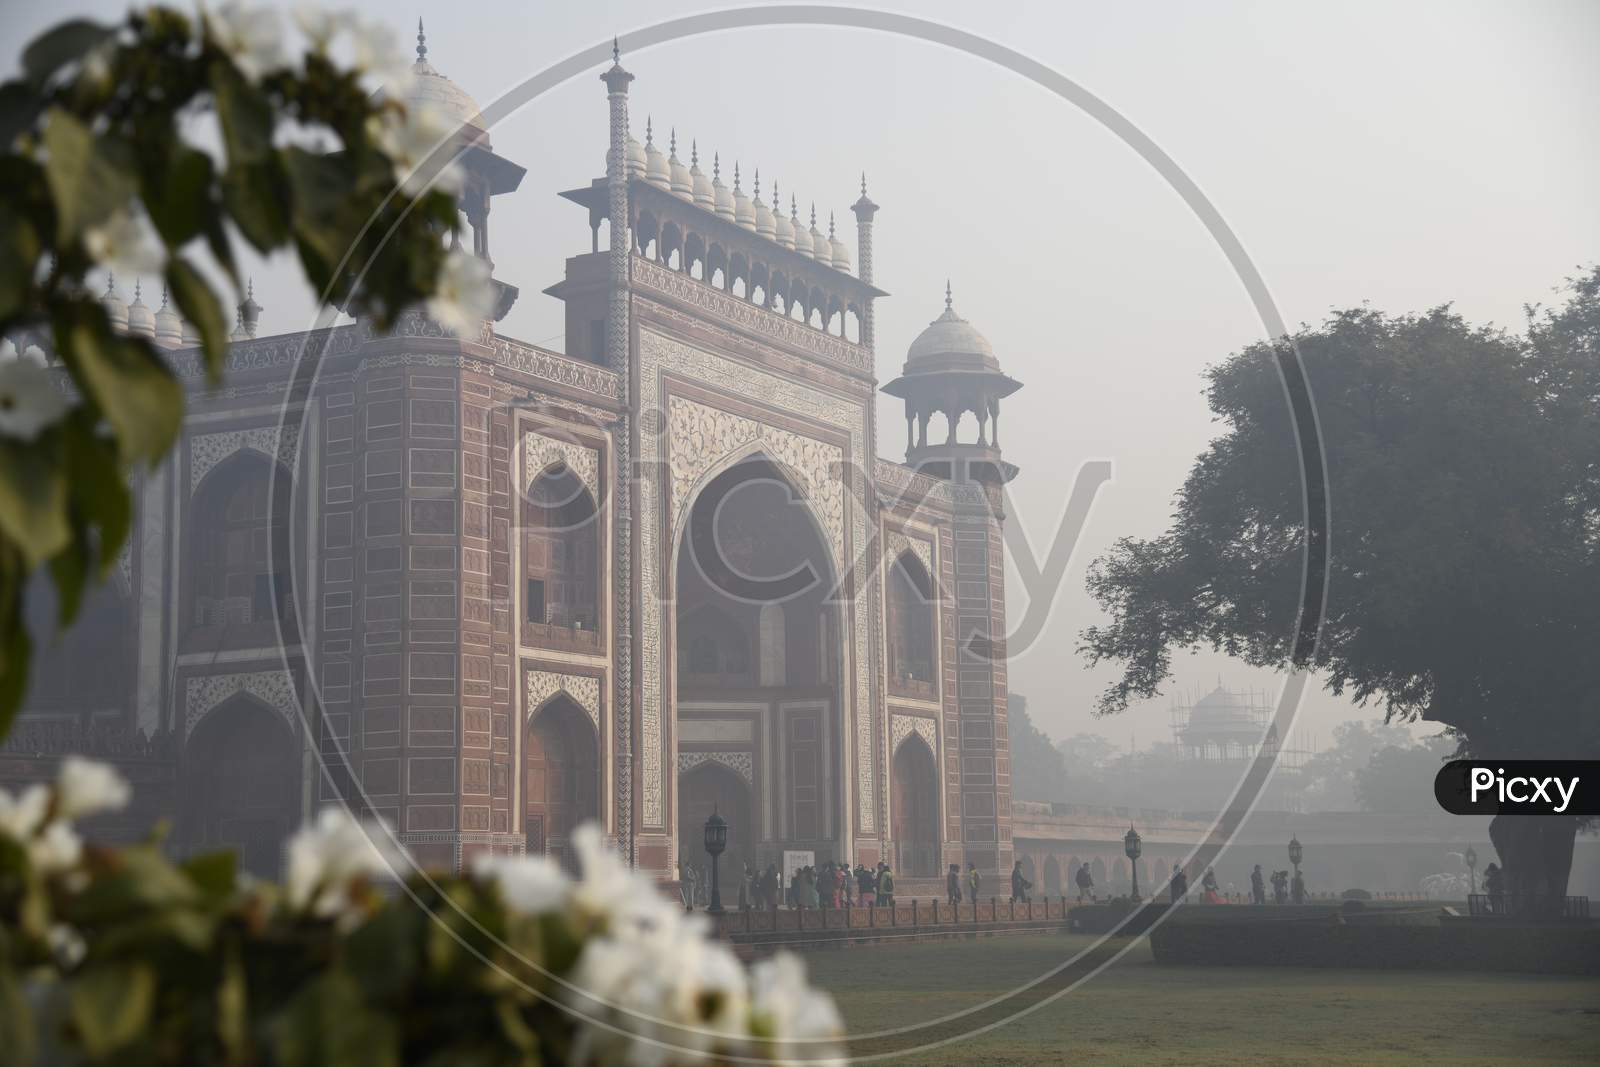 A Morning view of Darwaza-i-rauza of Taj Mahal